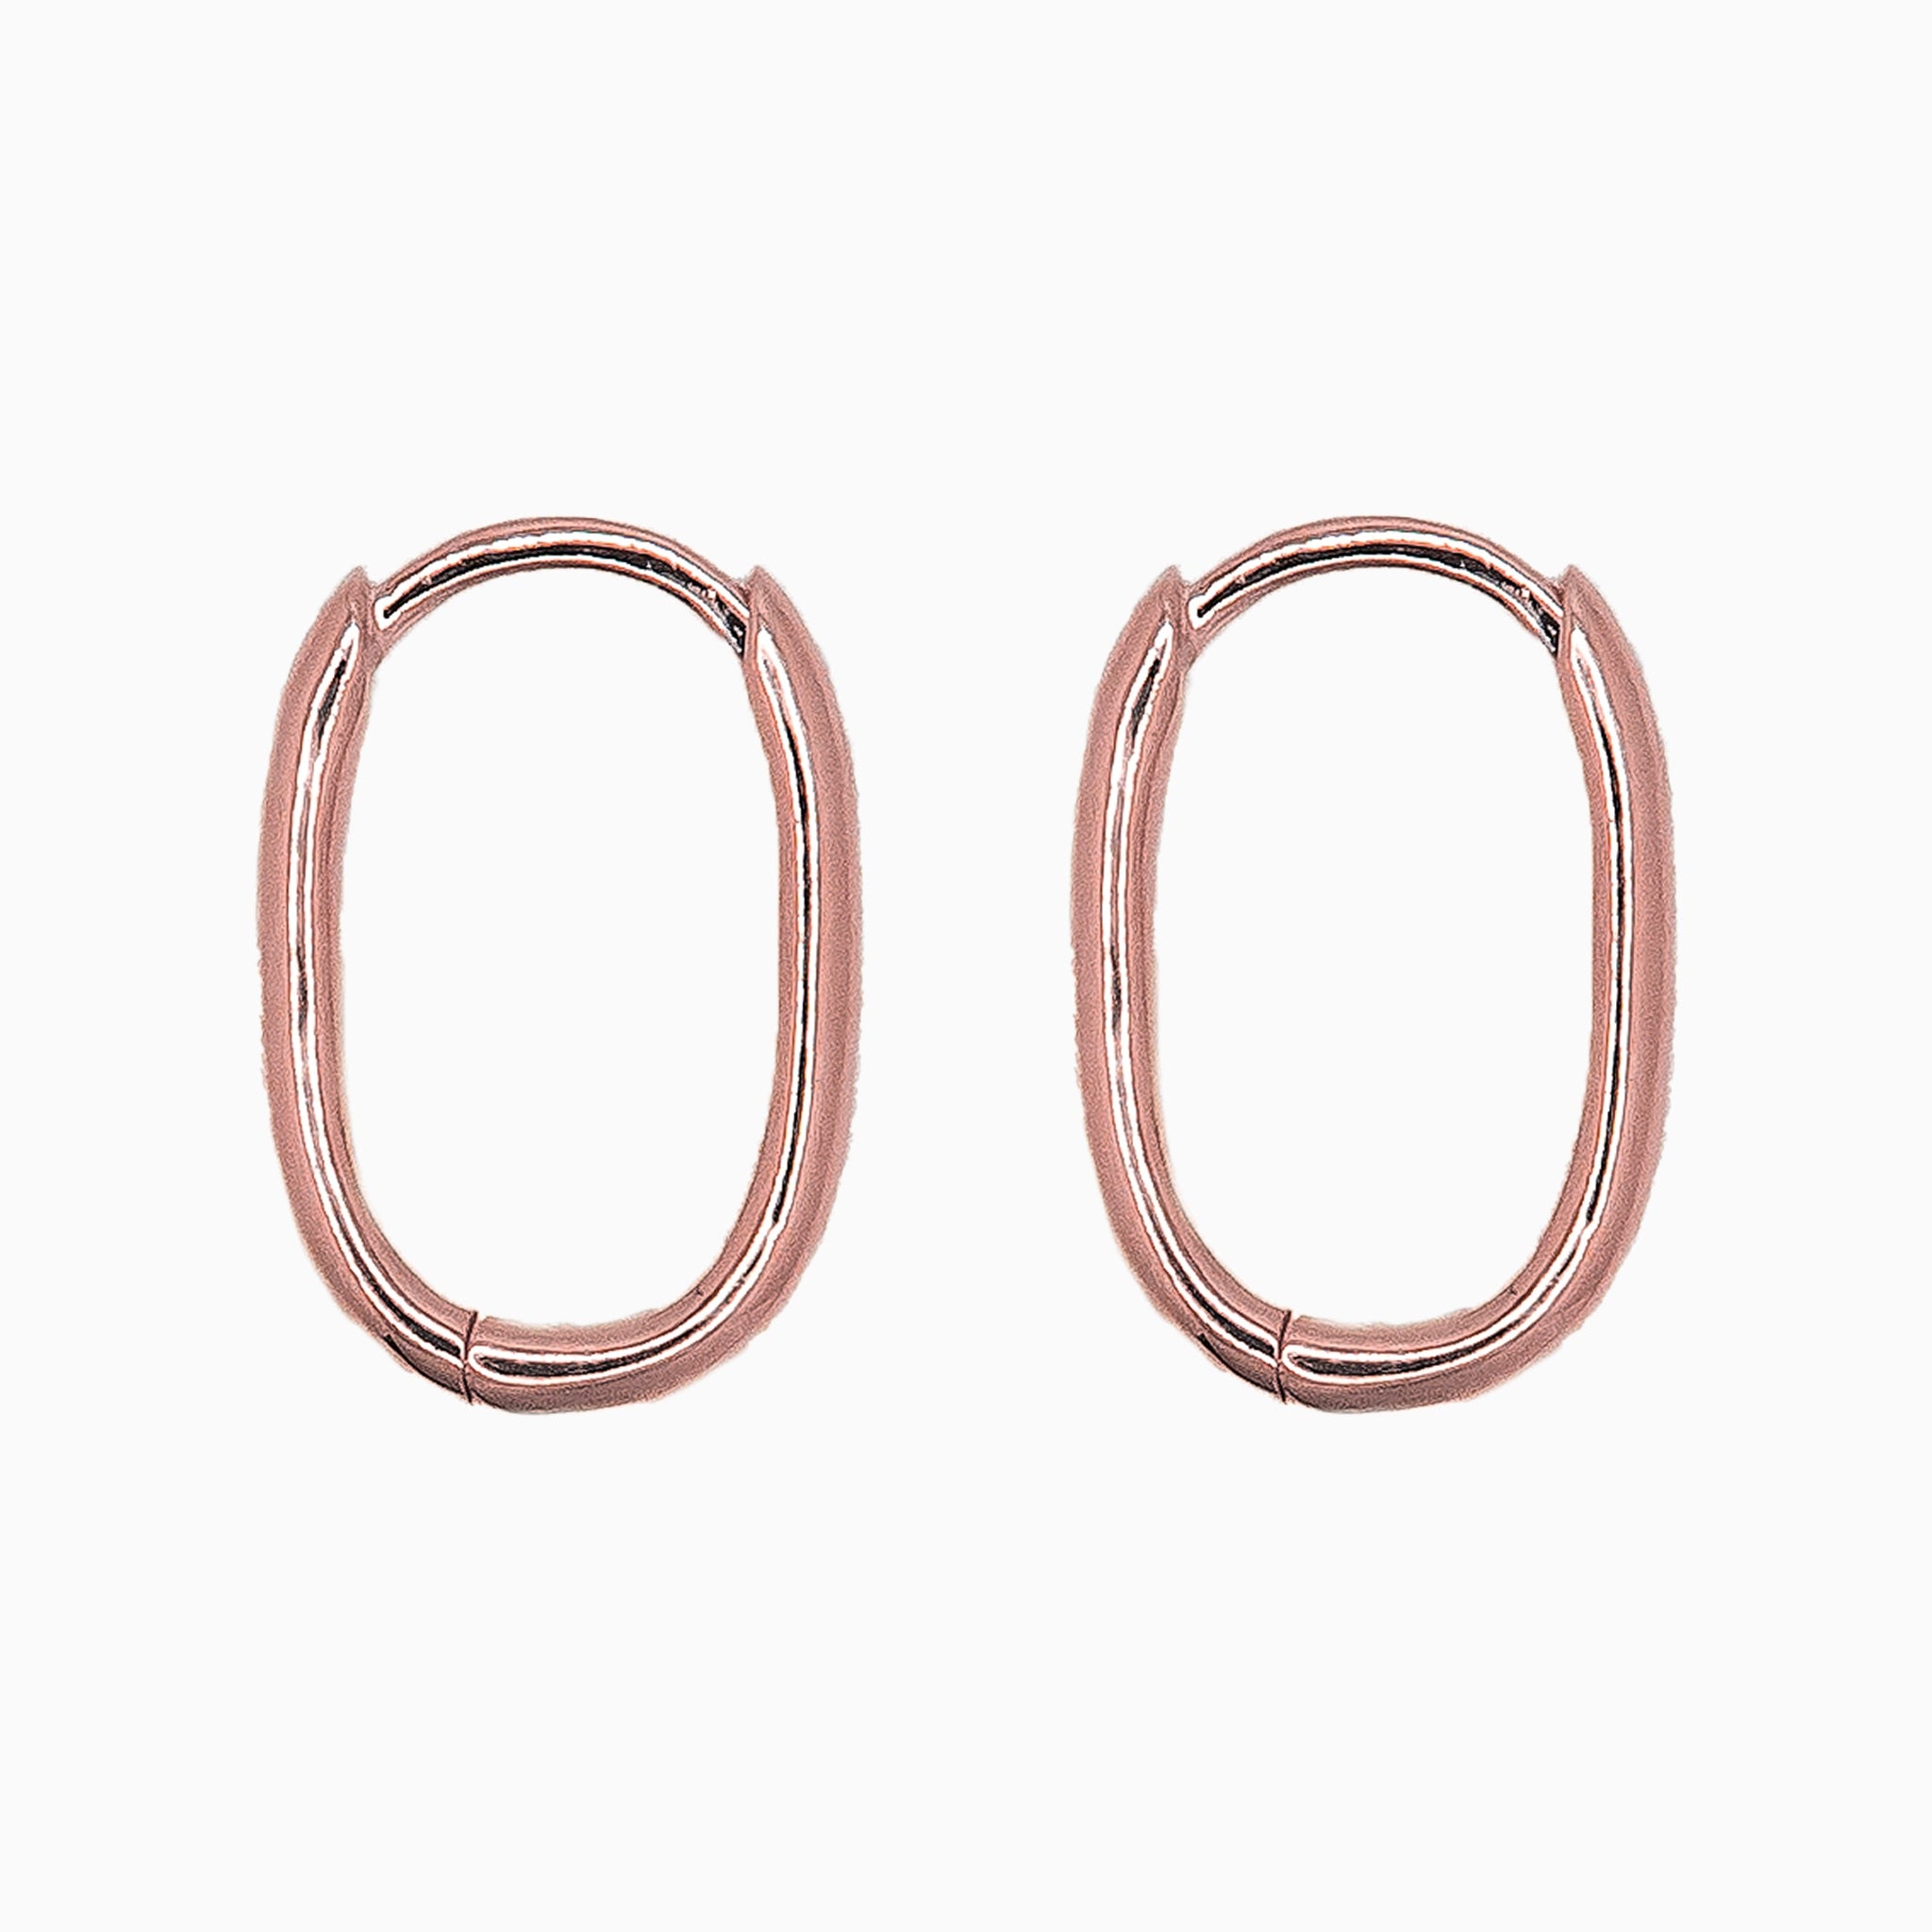 14k Rose Gold 15mm x 10mm Hinged Everyday Oval Hoop Earrings, Side View